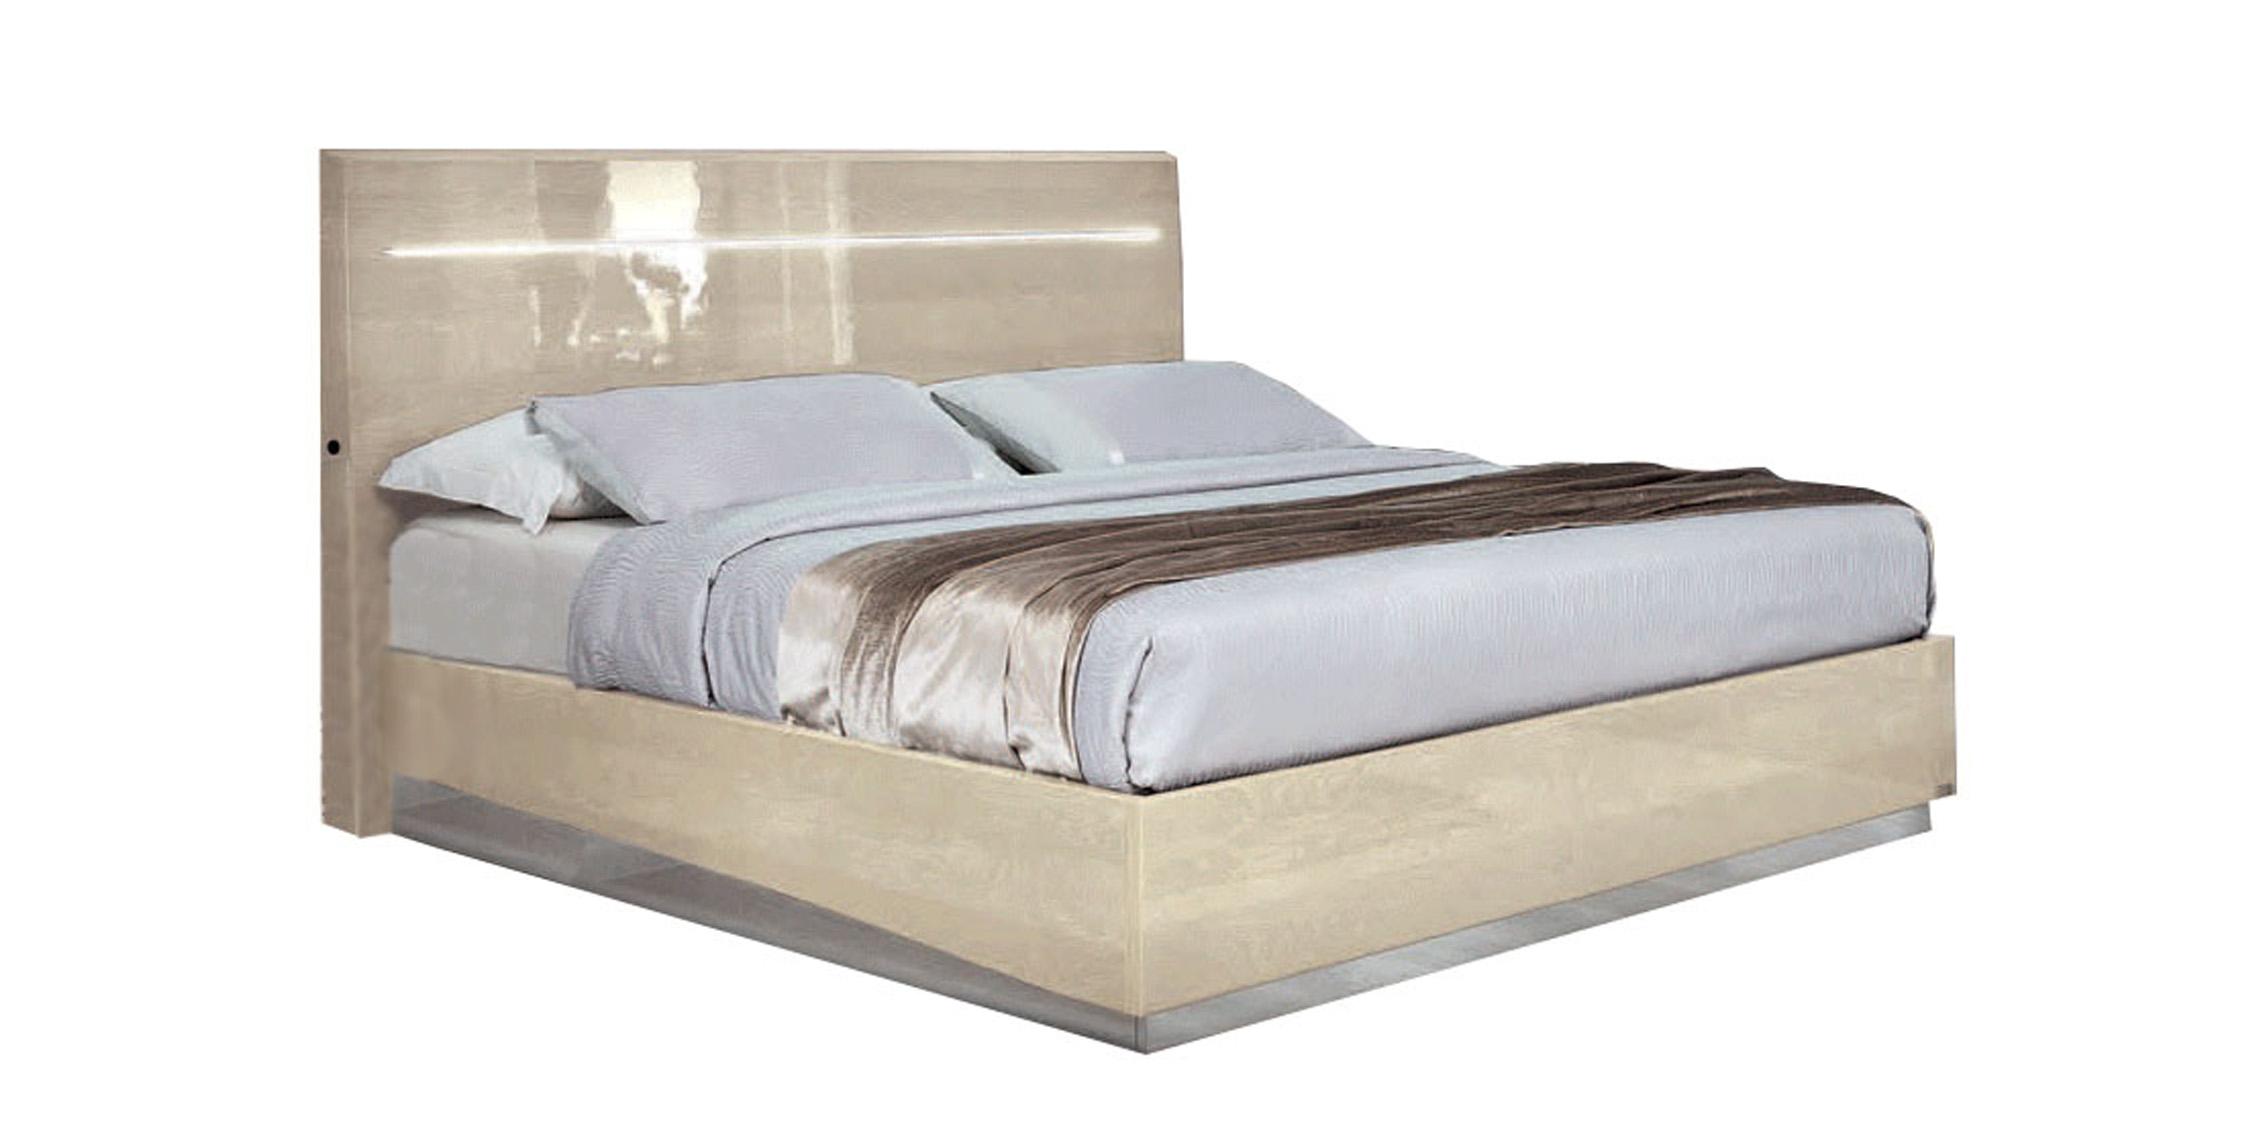 Contemporary, Modern Plarform bed IVORY Platinum Legno IVORY Platinum Legno-Q in Platinum, Ivory 